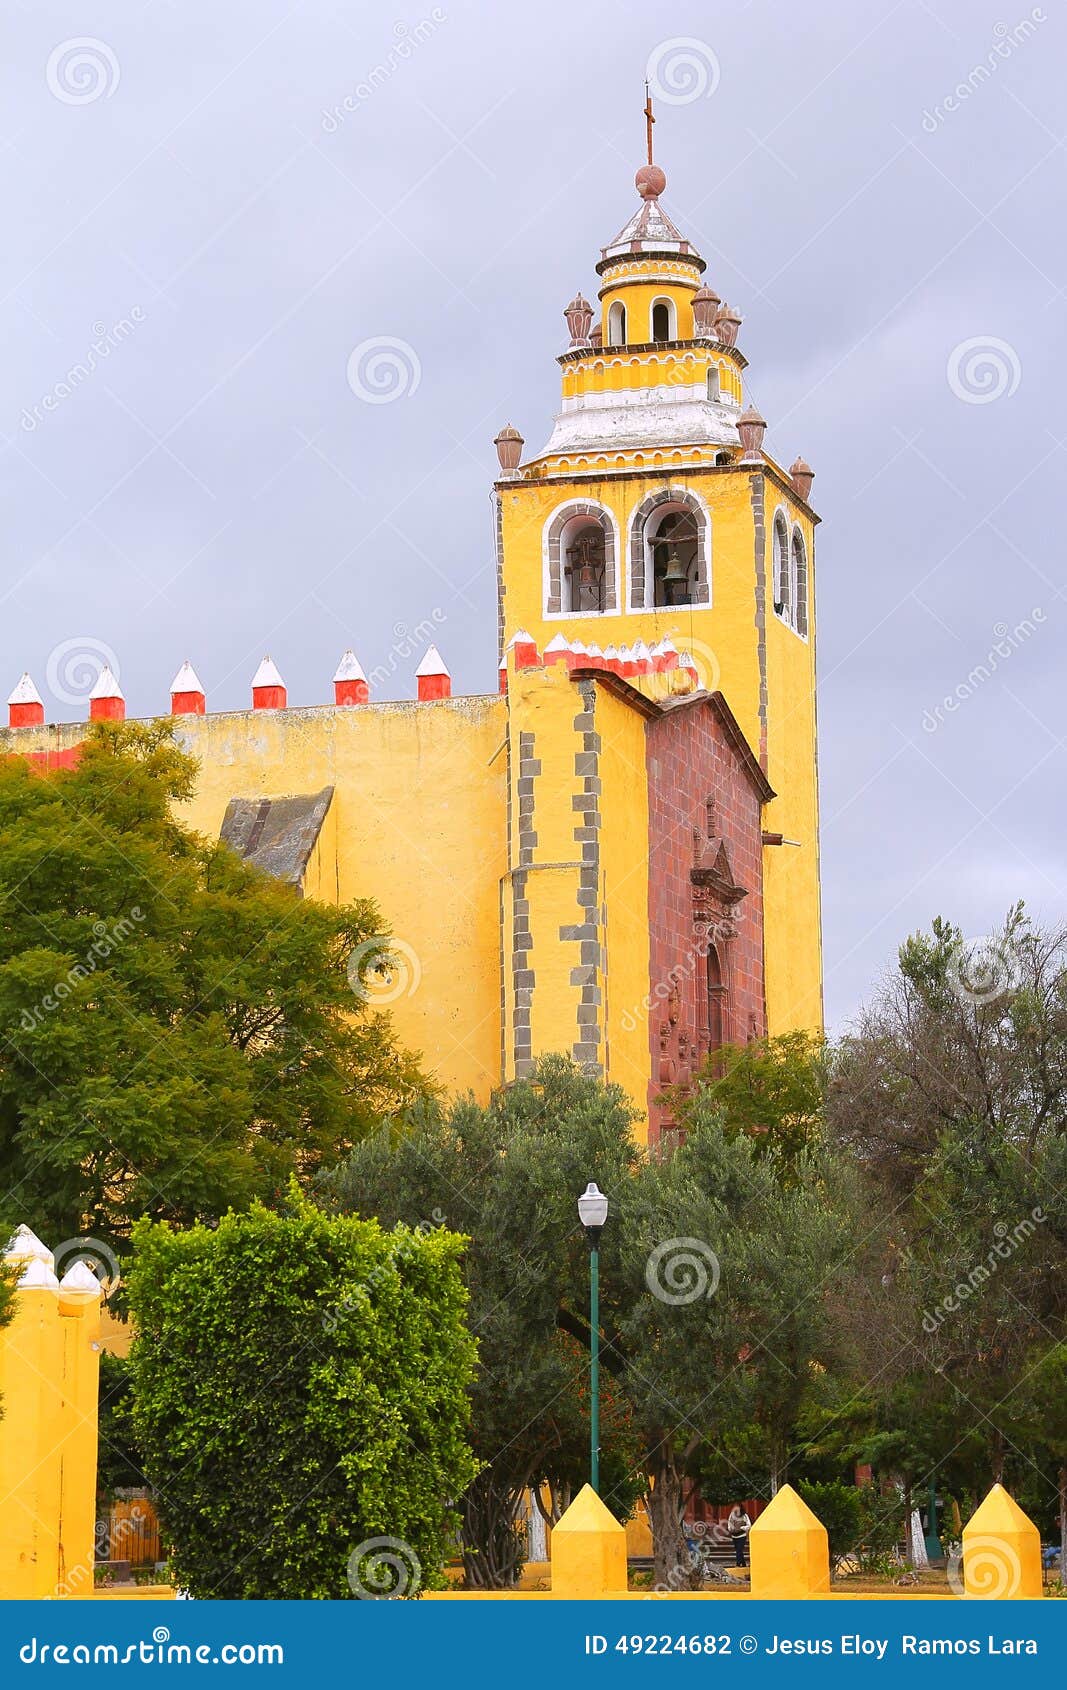 convent in ixmiquilpan hidalgo, mexico ii